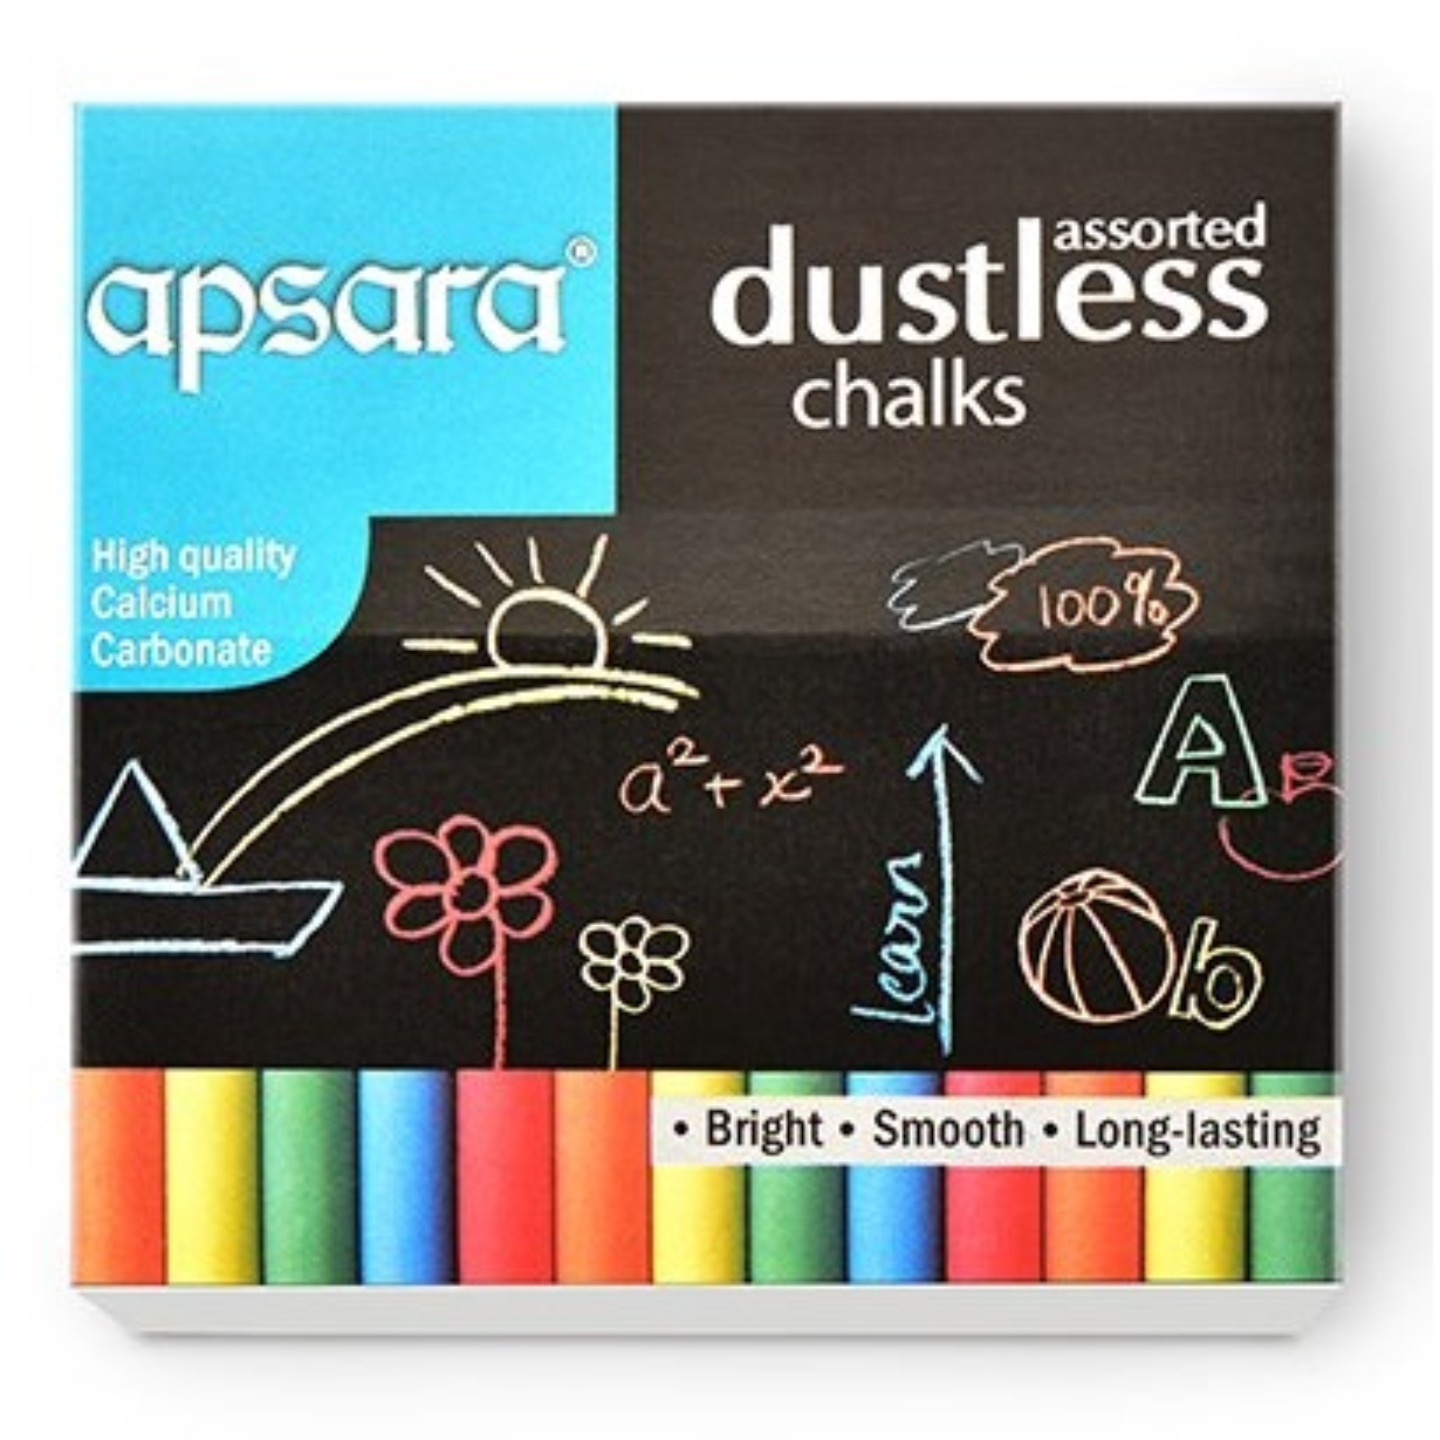 Apsara Assorted Dustless Chalks pack of 10